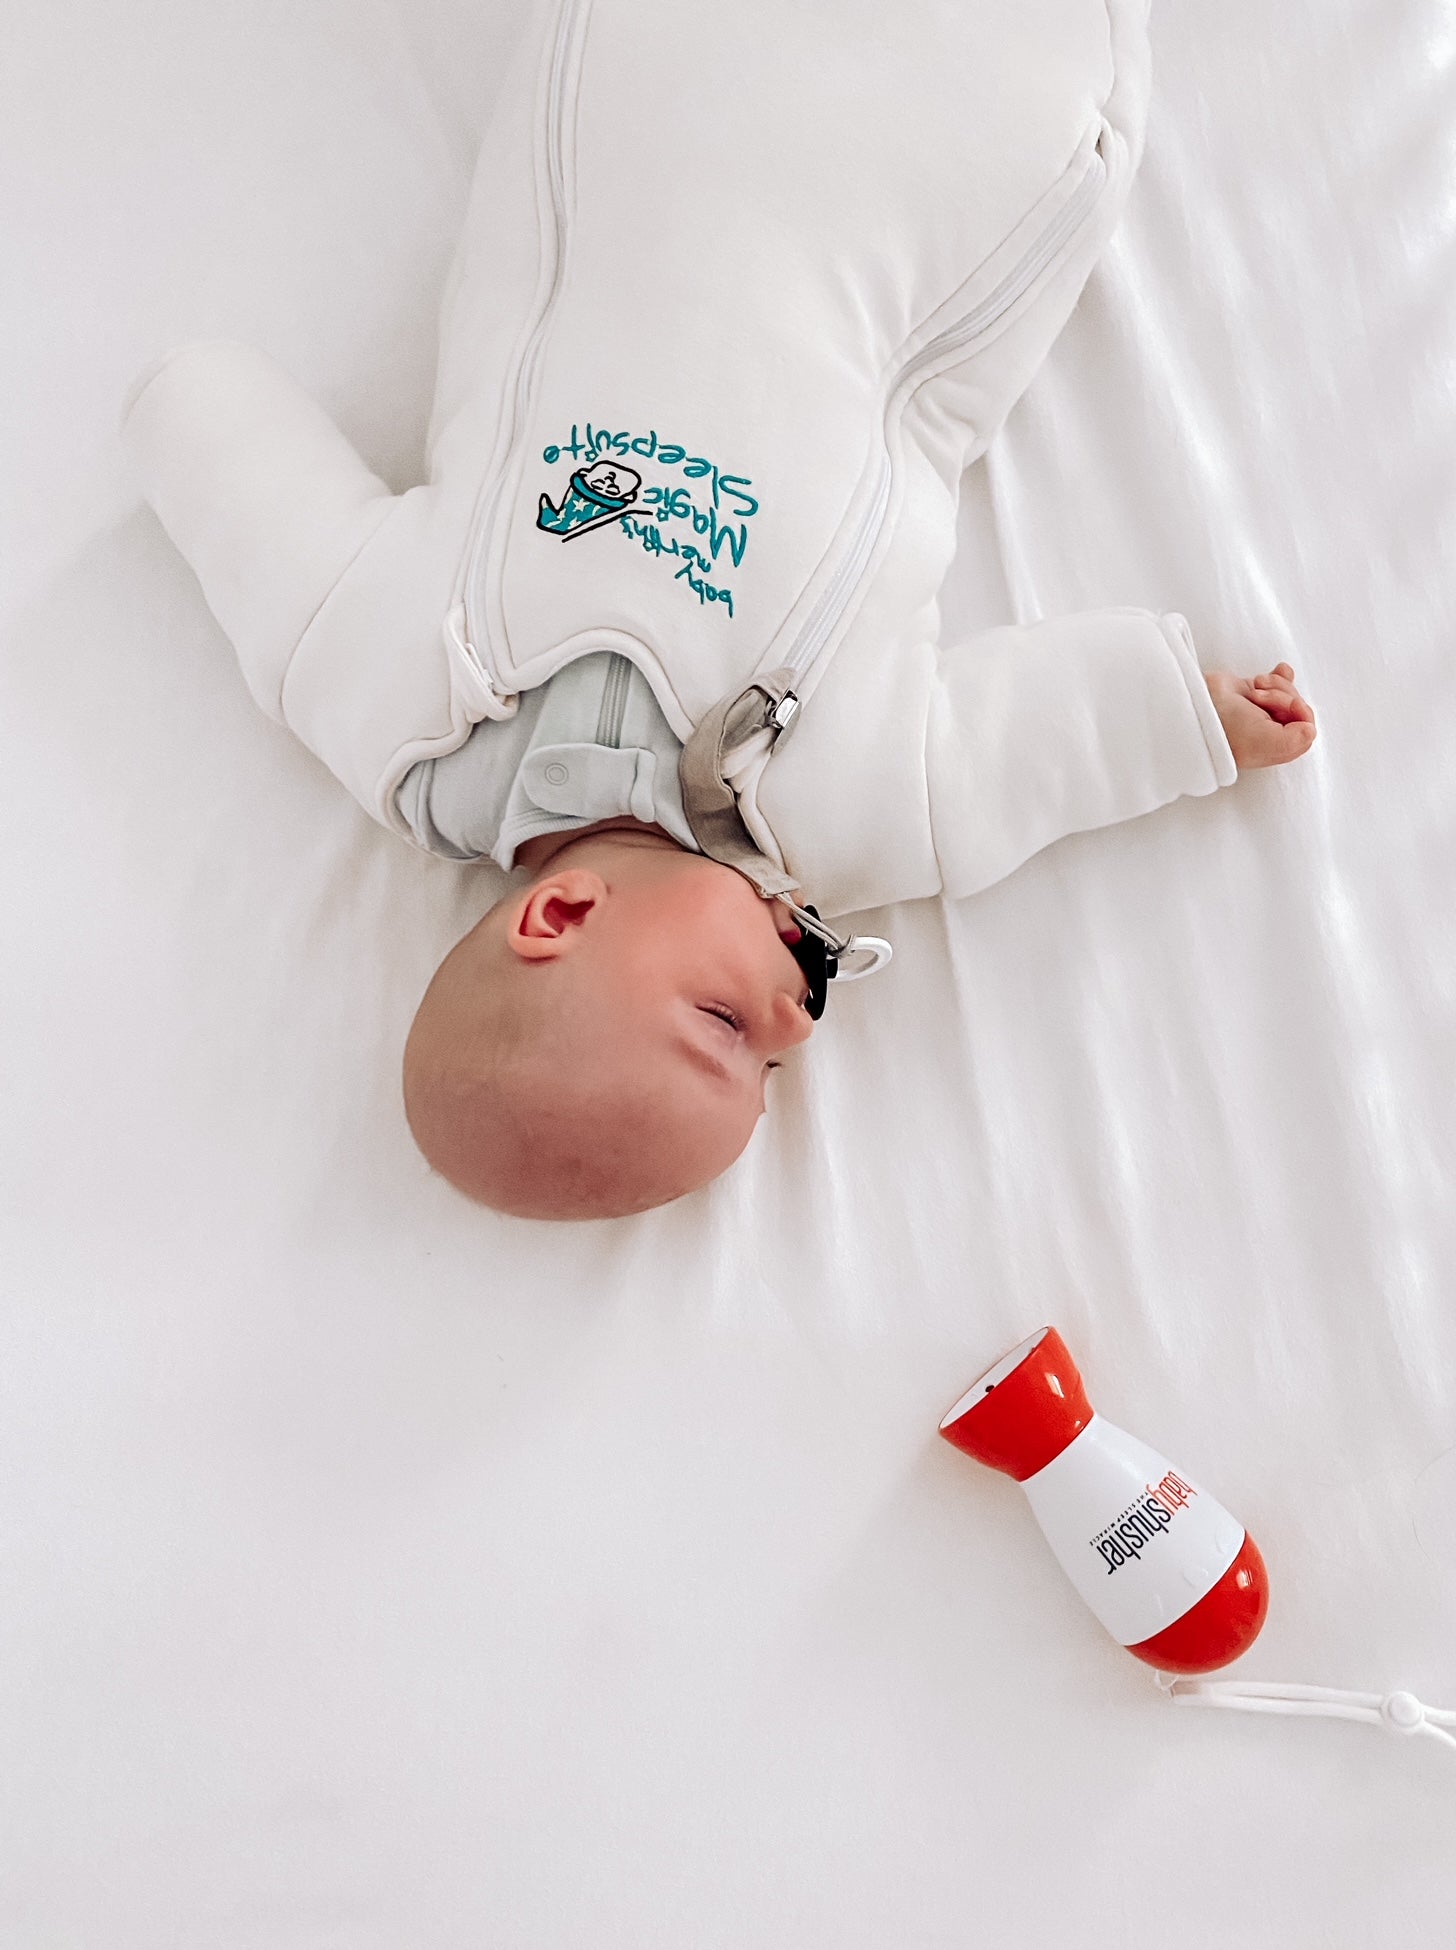 Baby Shusher Sound Machine Sleep Miracle Gift Set – Swaddles Baby